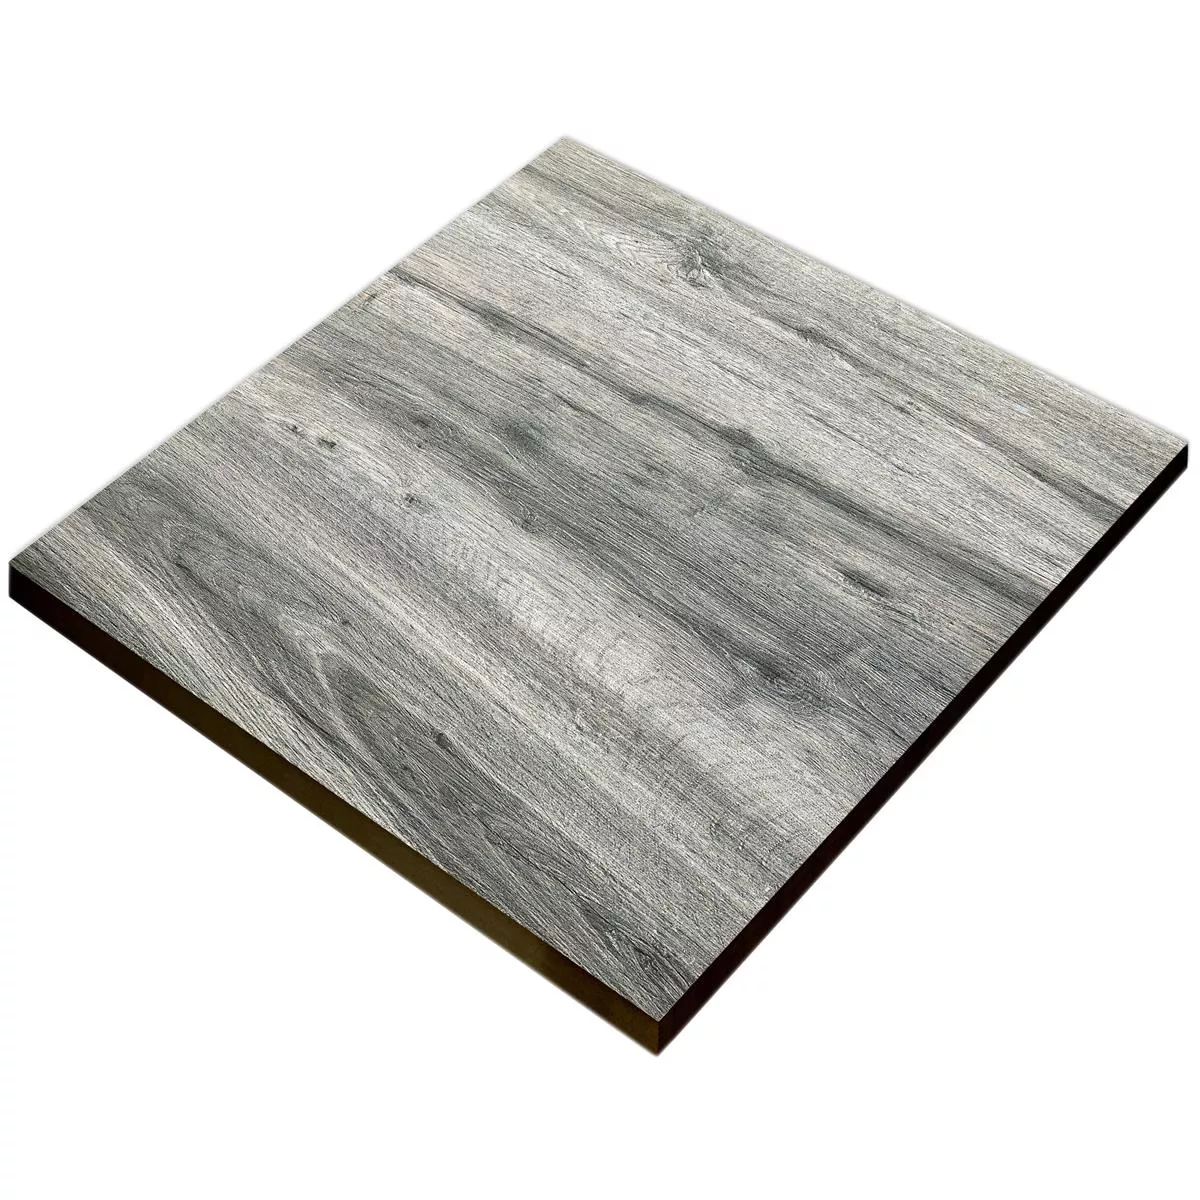 Sample Terrace Tiles Starwood Wood Optic Grey 60x60cm